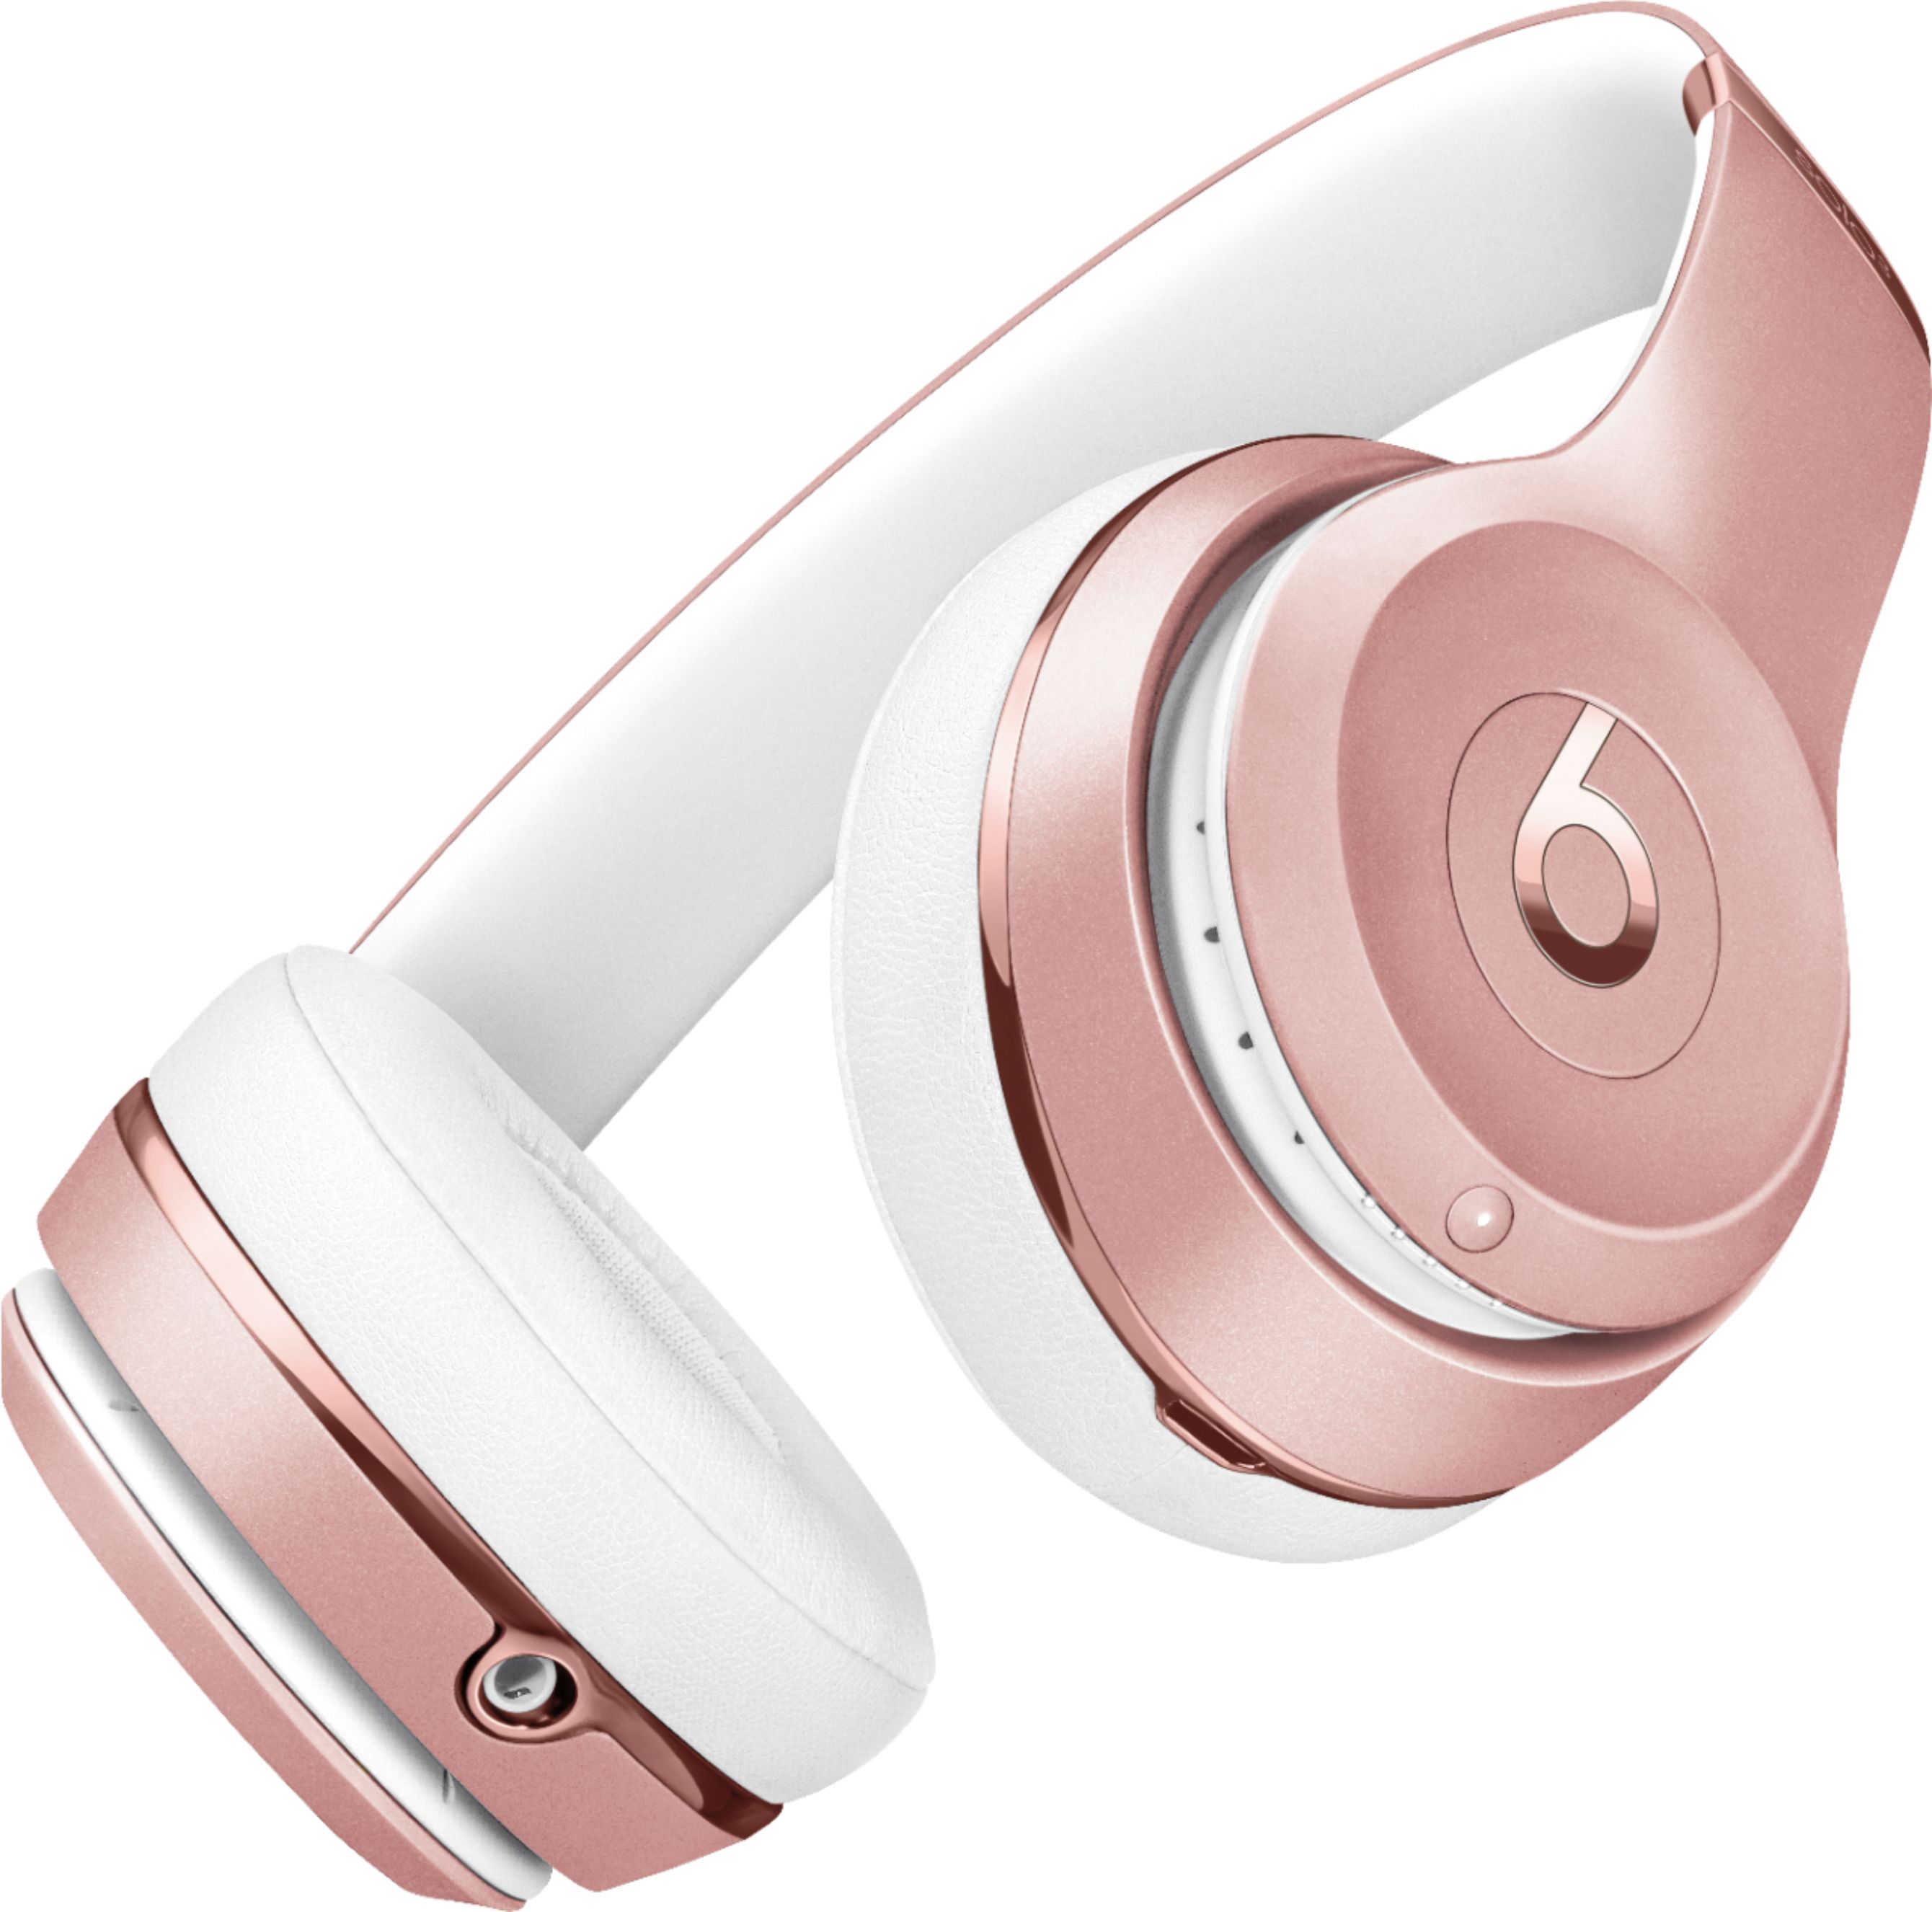 Beats by Dr. Dre Solo³ Wireless On-Ear Headphones Rose Gold 